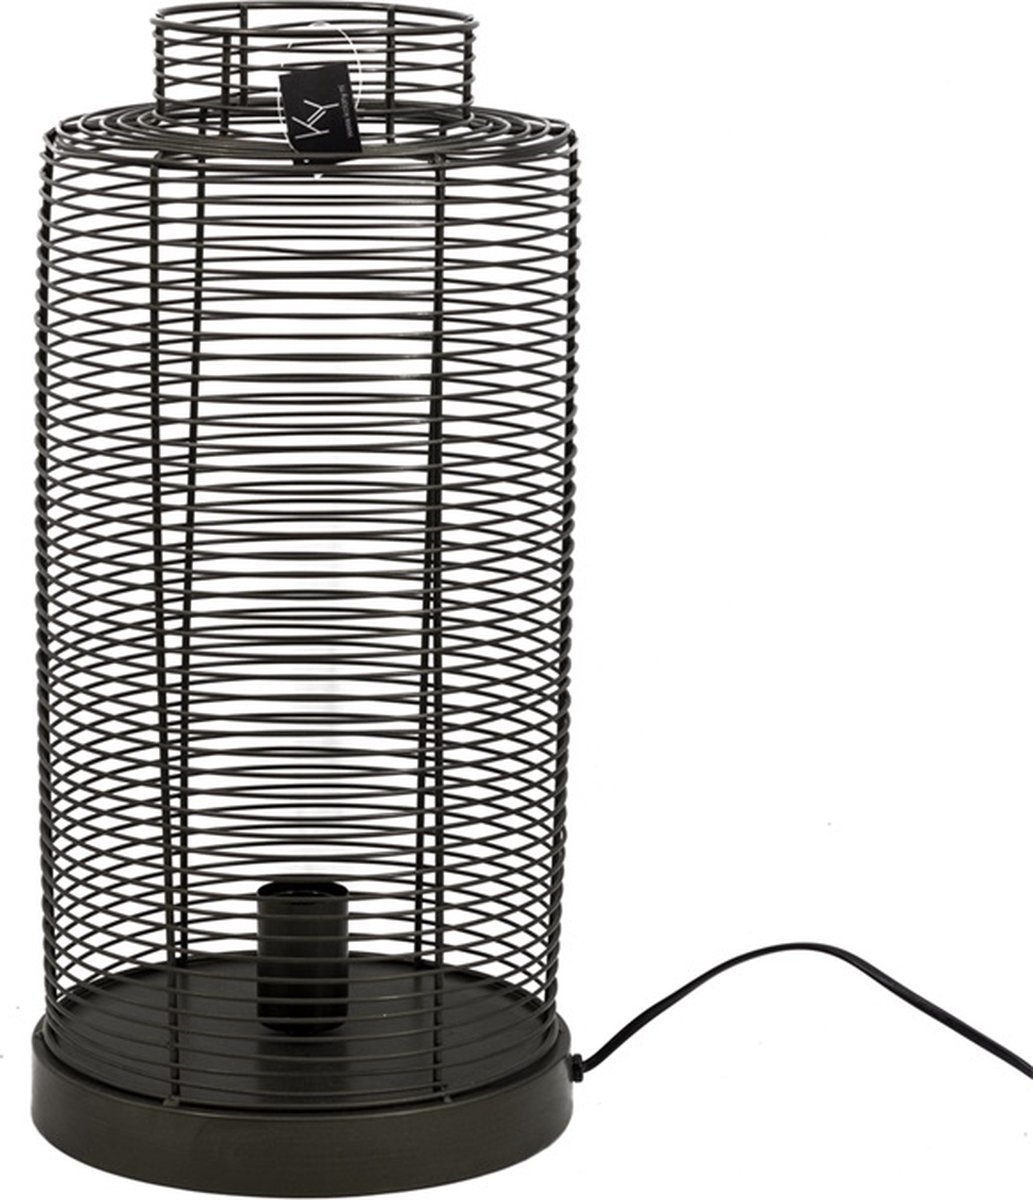 Tafellamp Industrieel - Tafellampen - Tafellamp Zwart - Tafellampen Woonkamer - Tafellamp Slaapkamer - 51 cm